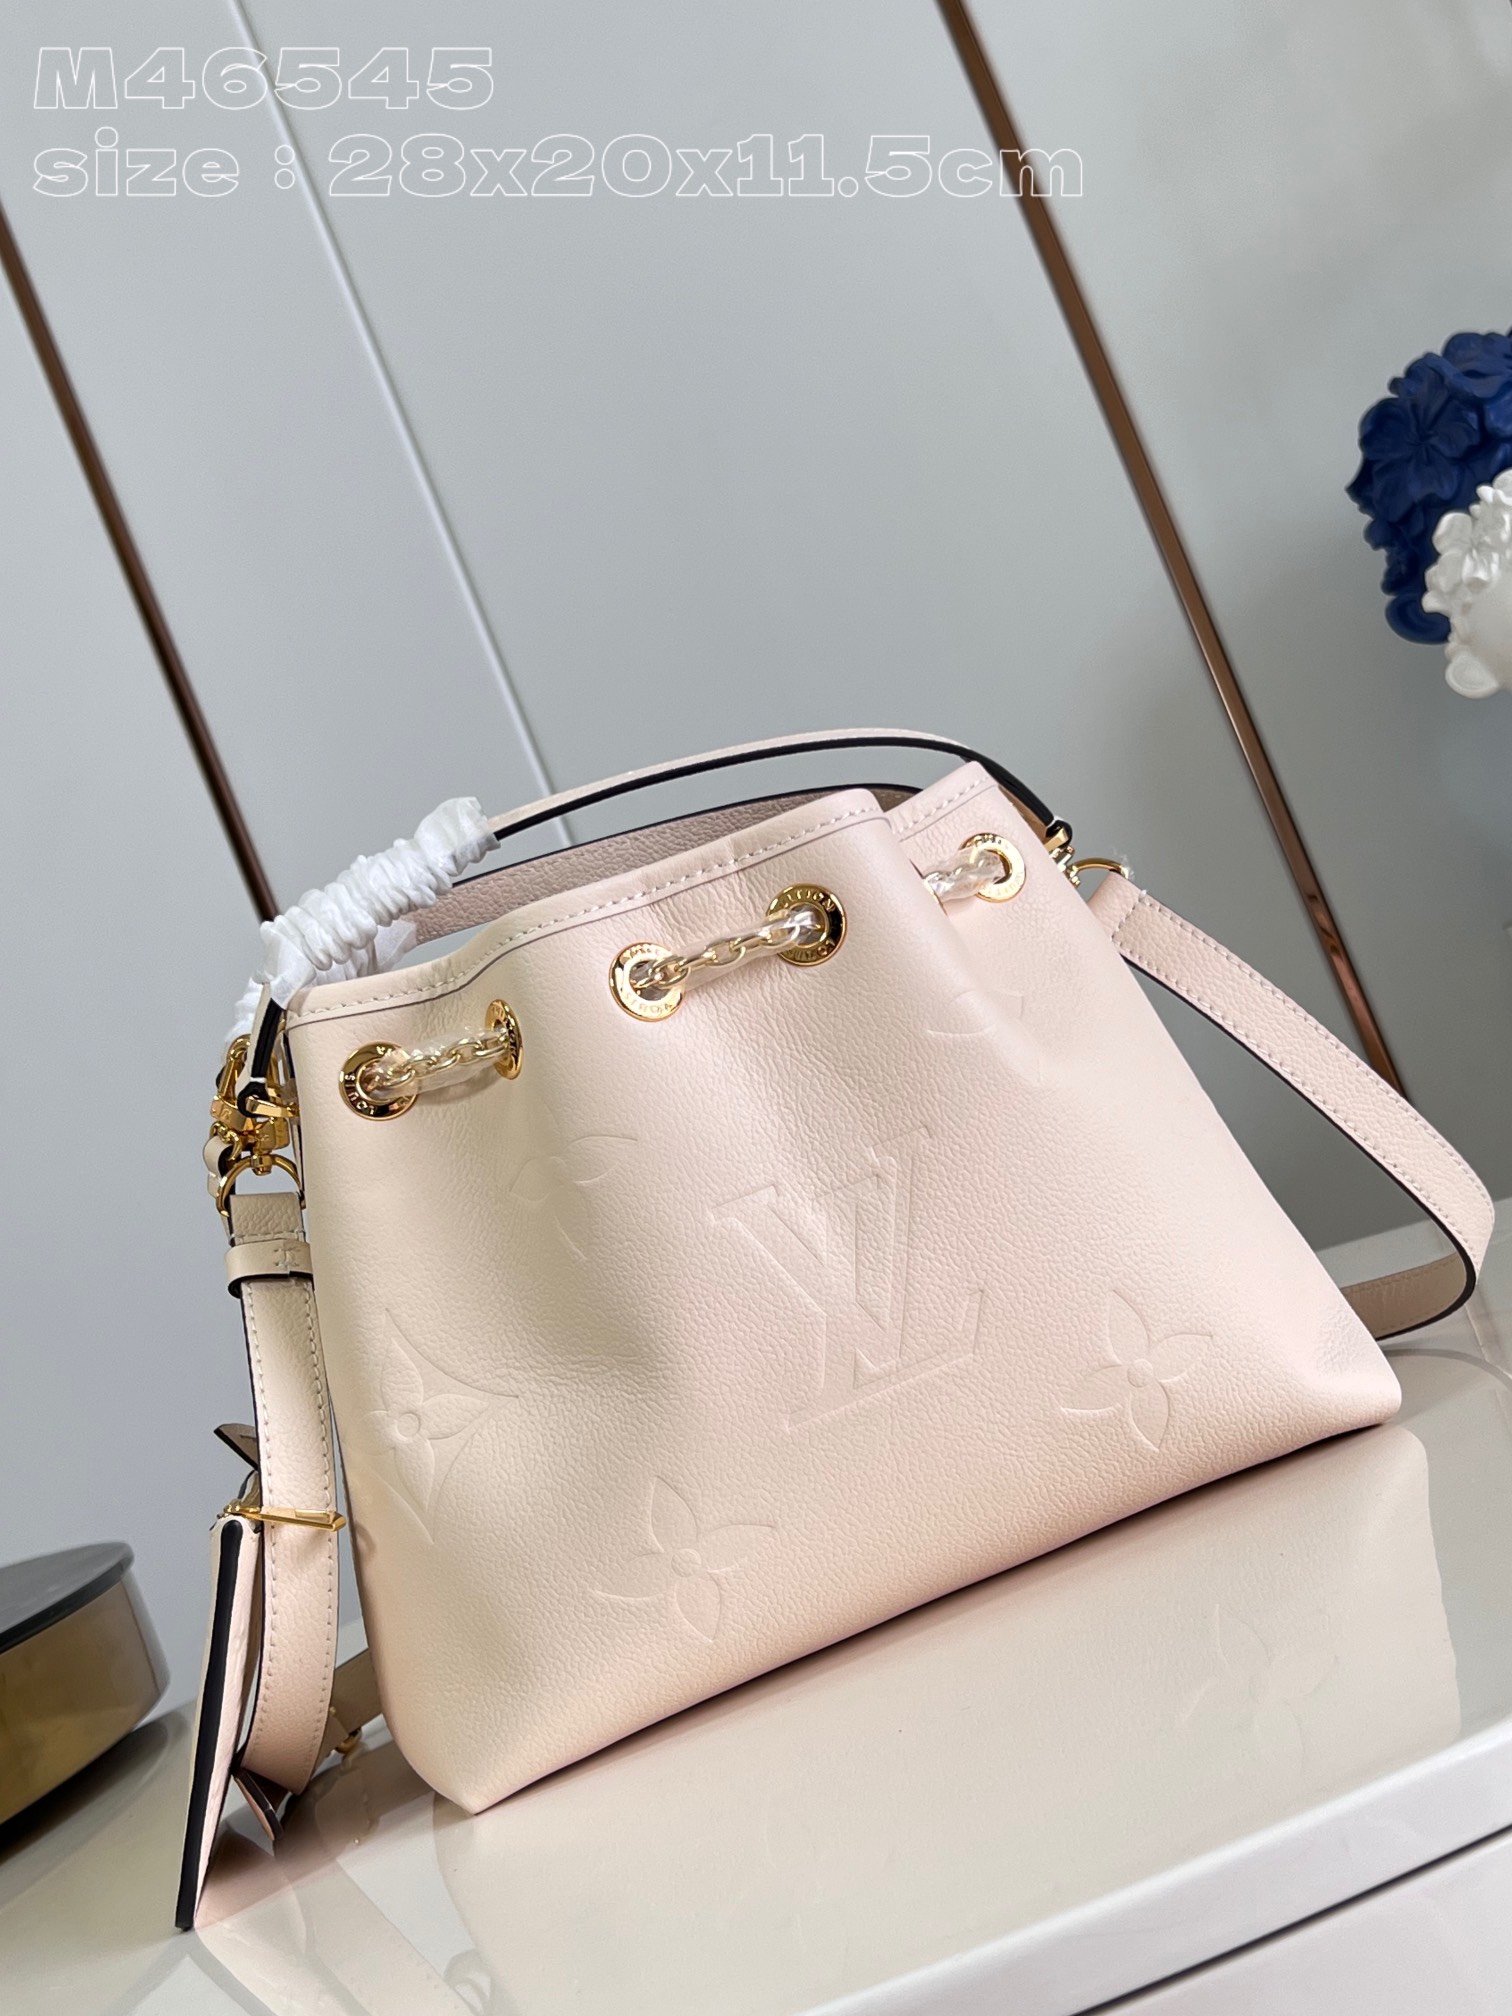 Louis Vuitton Sacs À Main Blanc Empreinte​ Fashion M46545